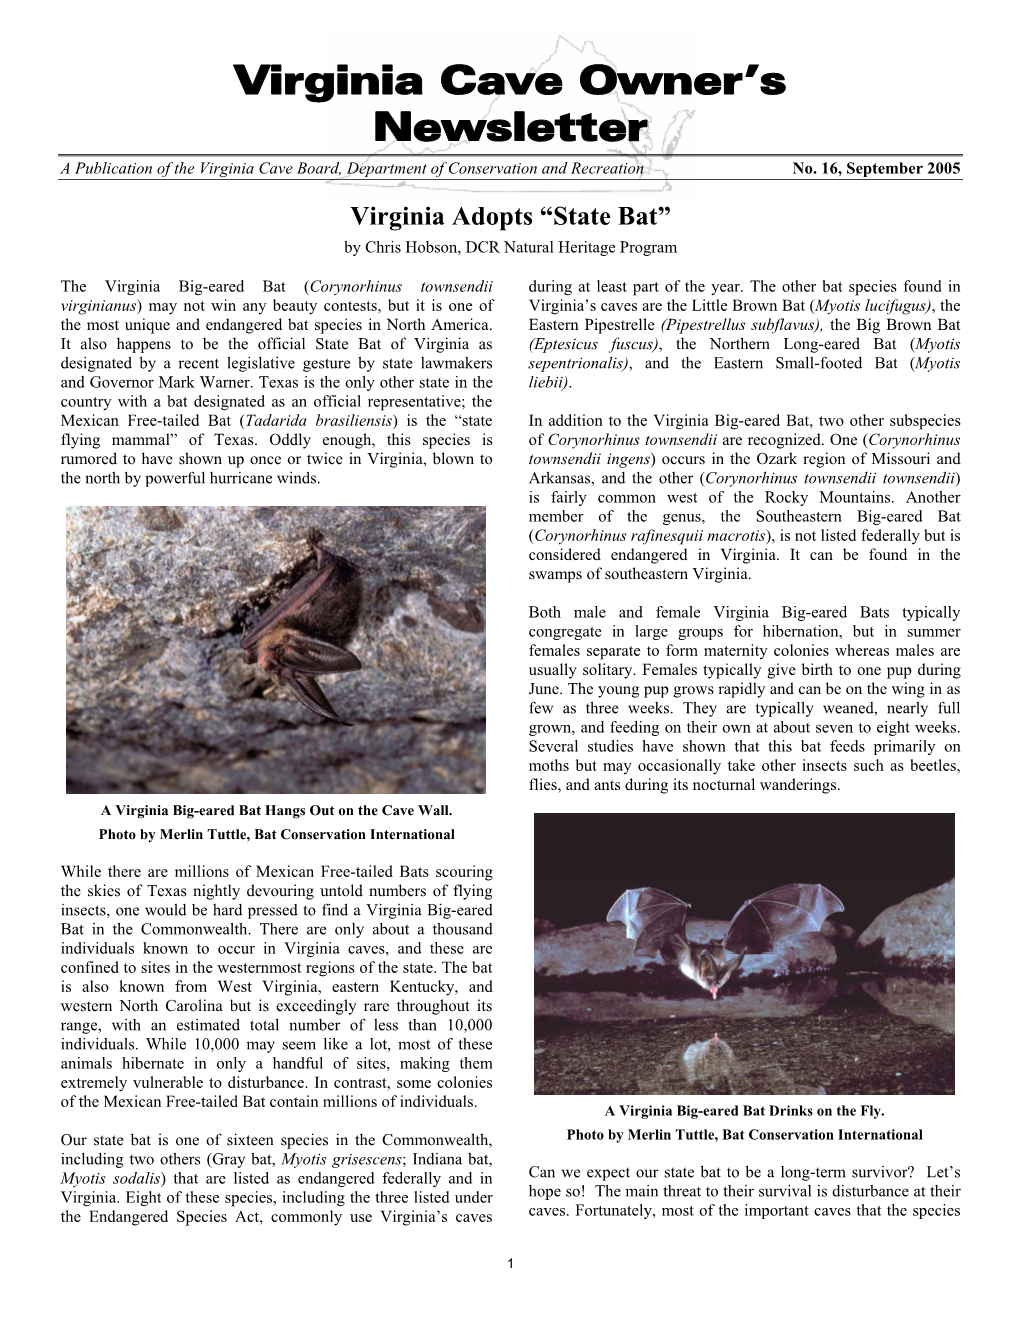 Virginia Cave Owner's Newsletter